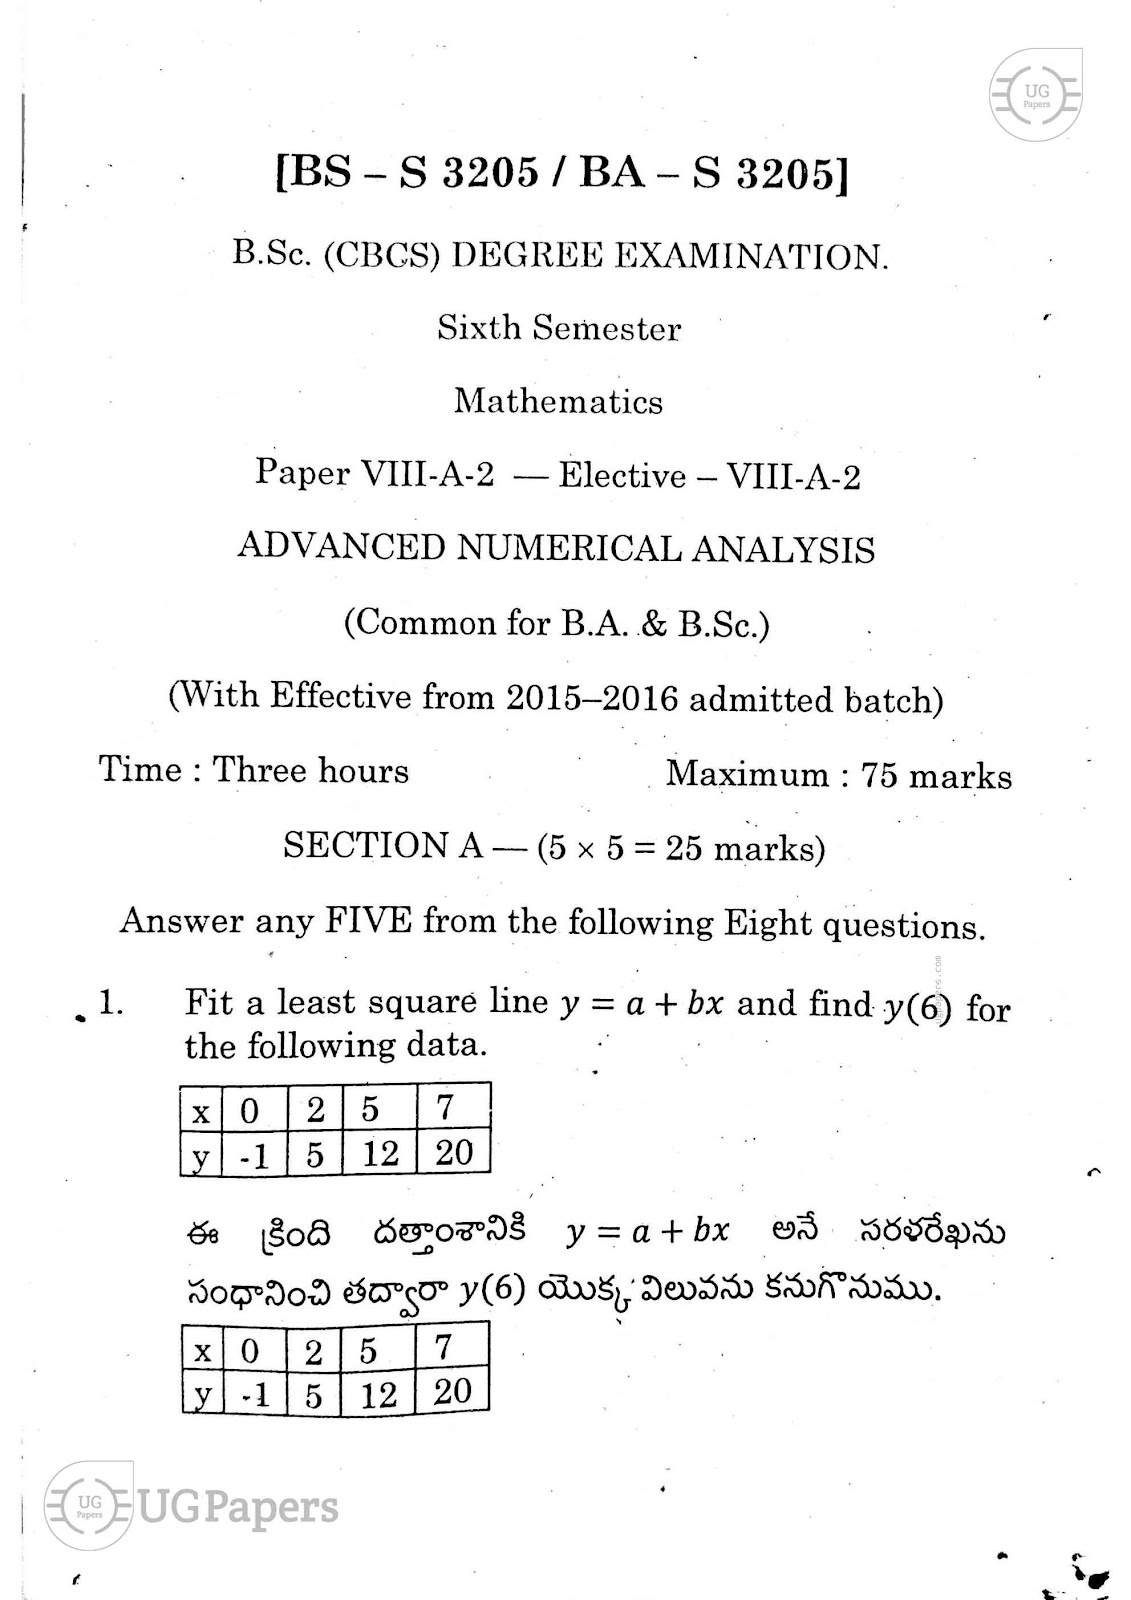 ugpapers.com, Andhra University, Semester 6, Maths cluster-2 8a-2 2020